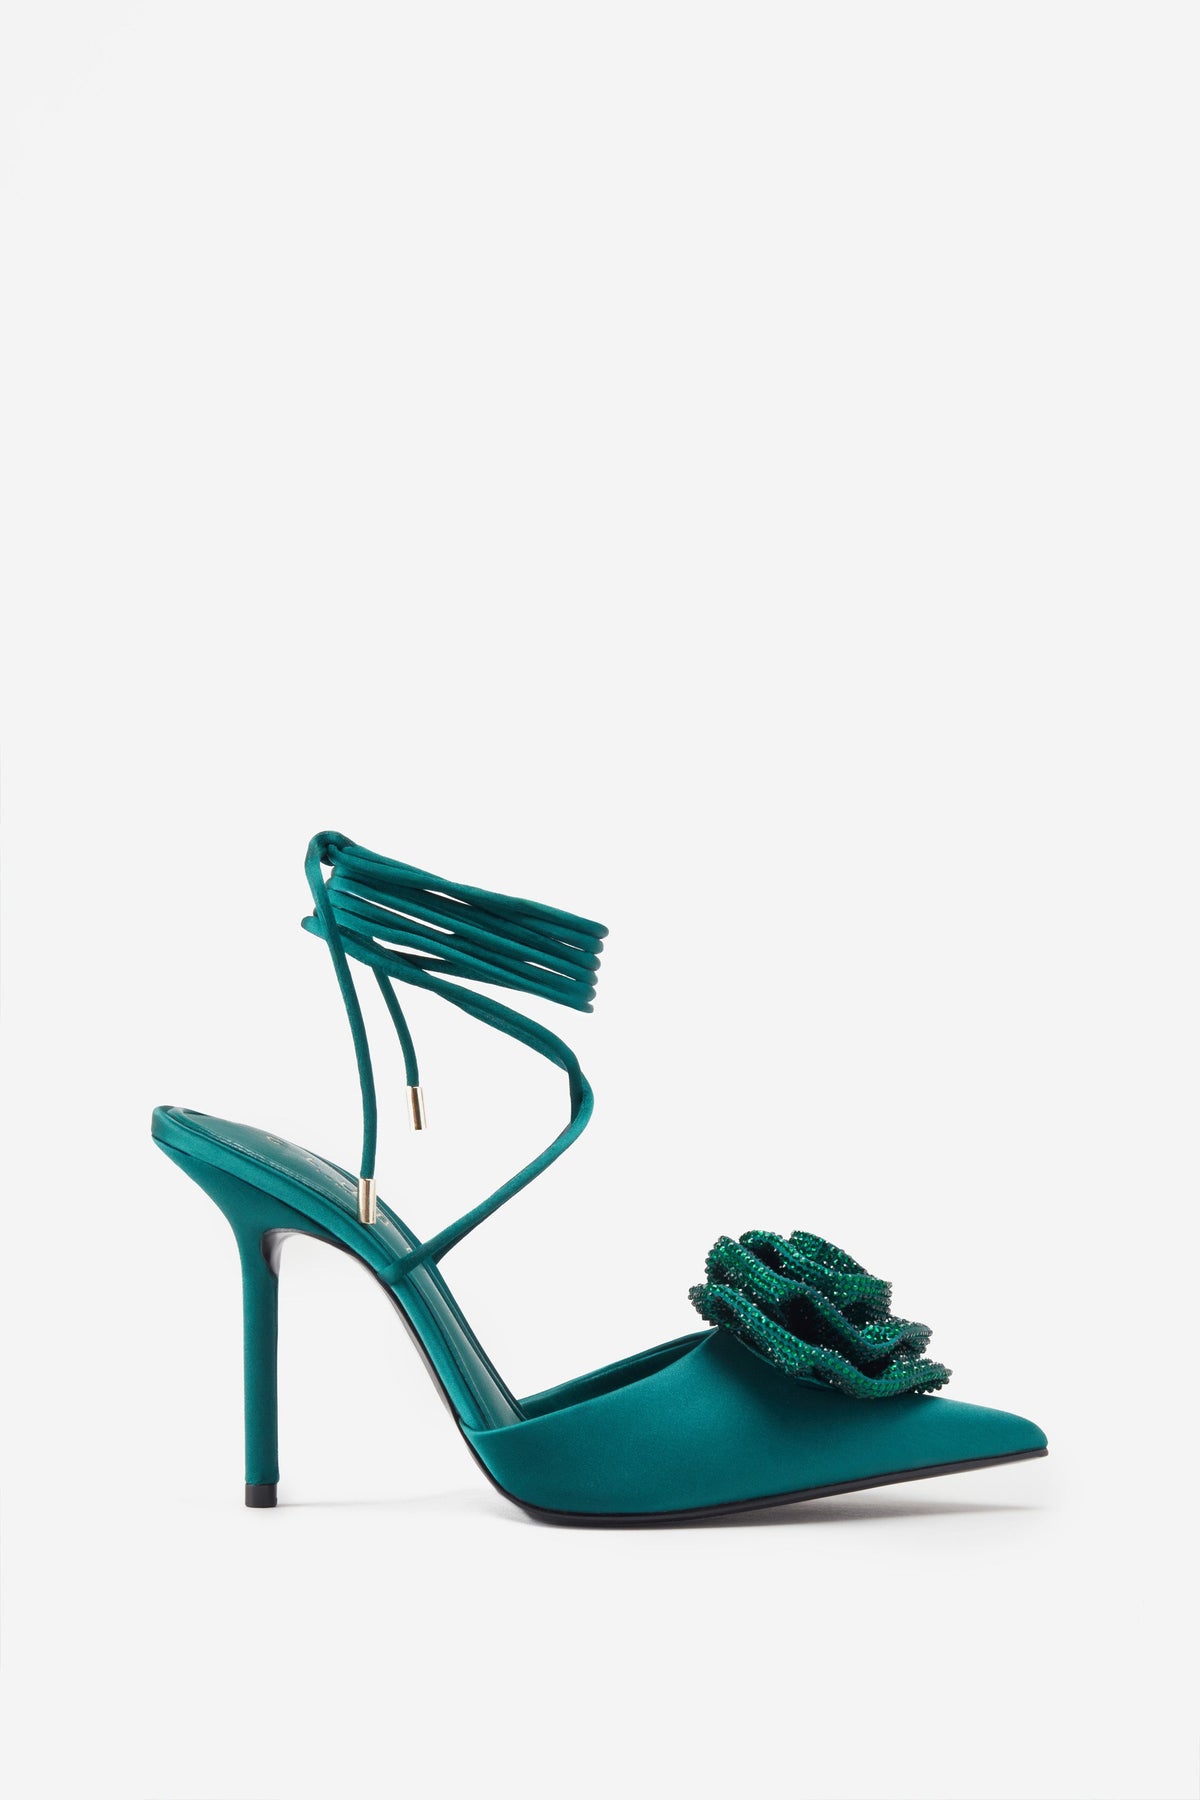 satin ankle strap heels - Milanoo.com